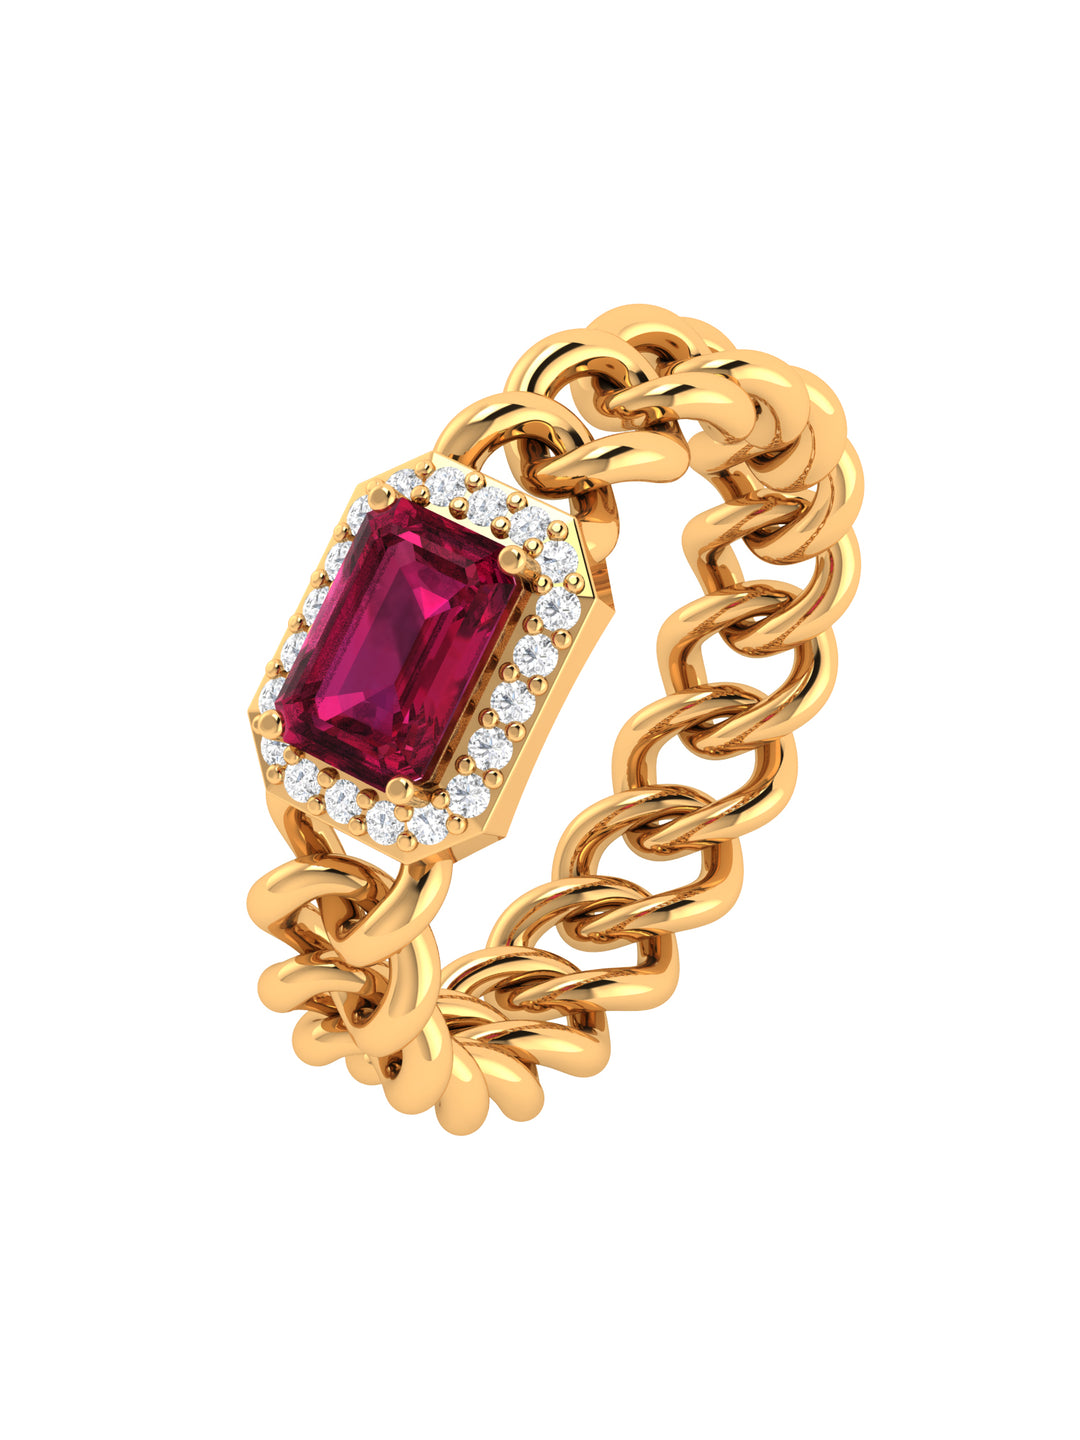 10 Karat Chain Link Diamond Fashion Ladies Ring RG11802-1YSC – Beeghly & Co.